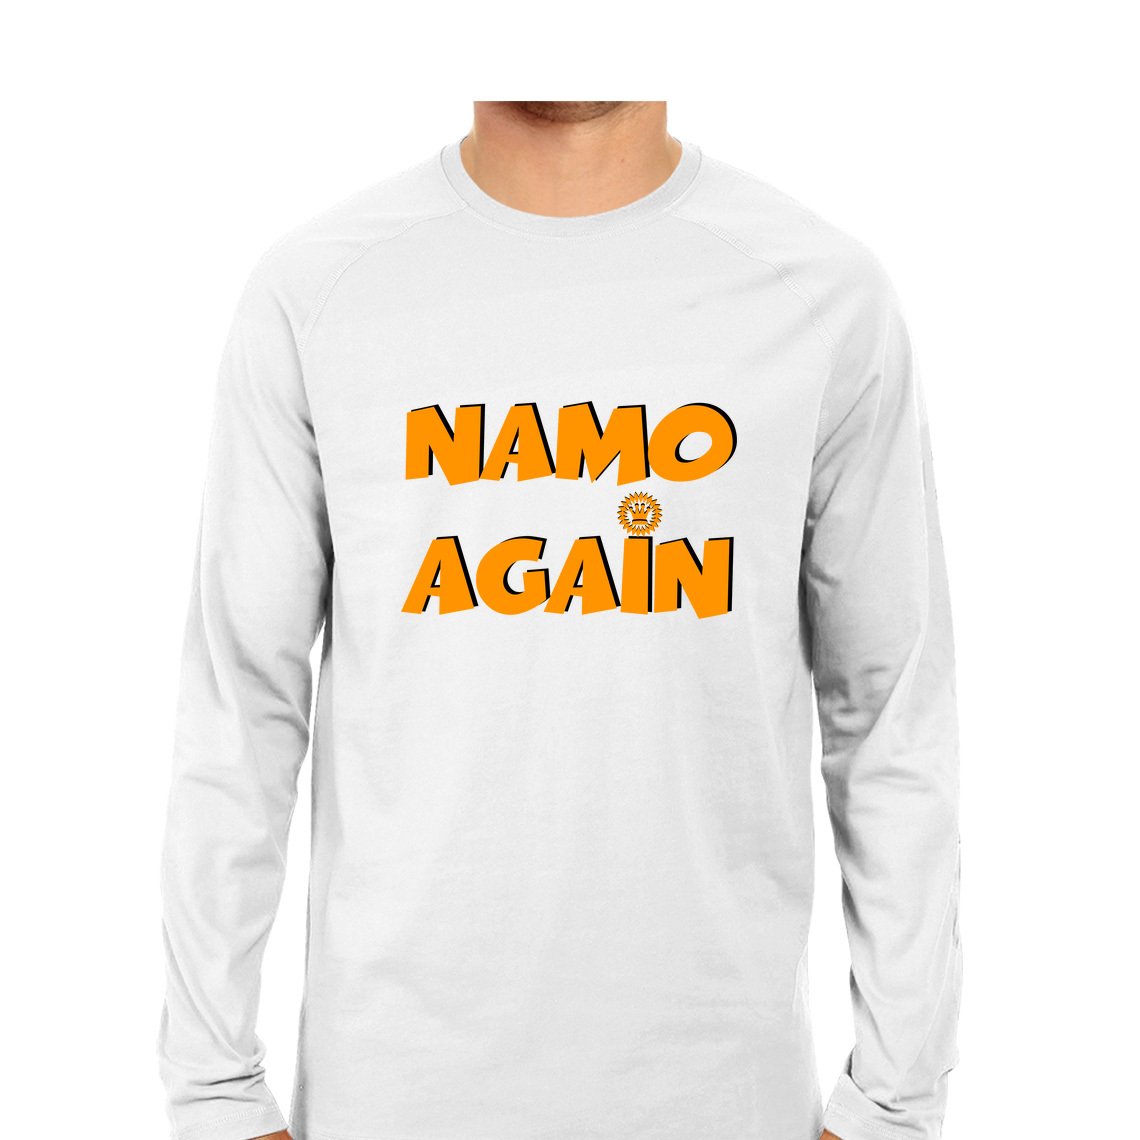 namo again t shirt online